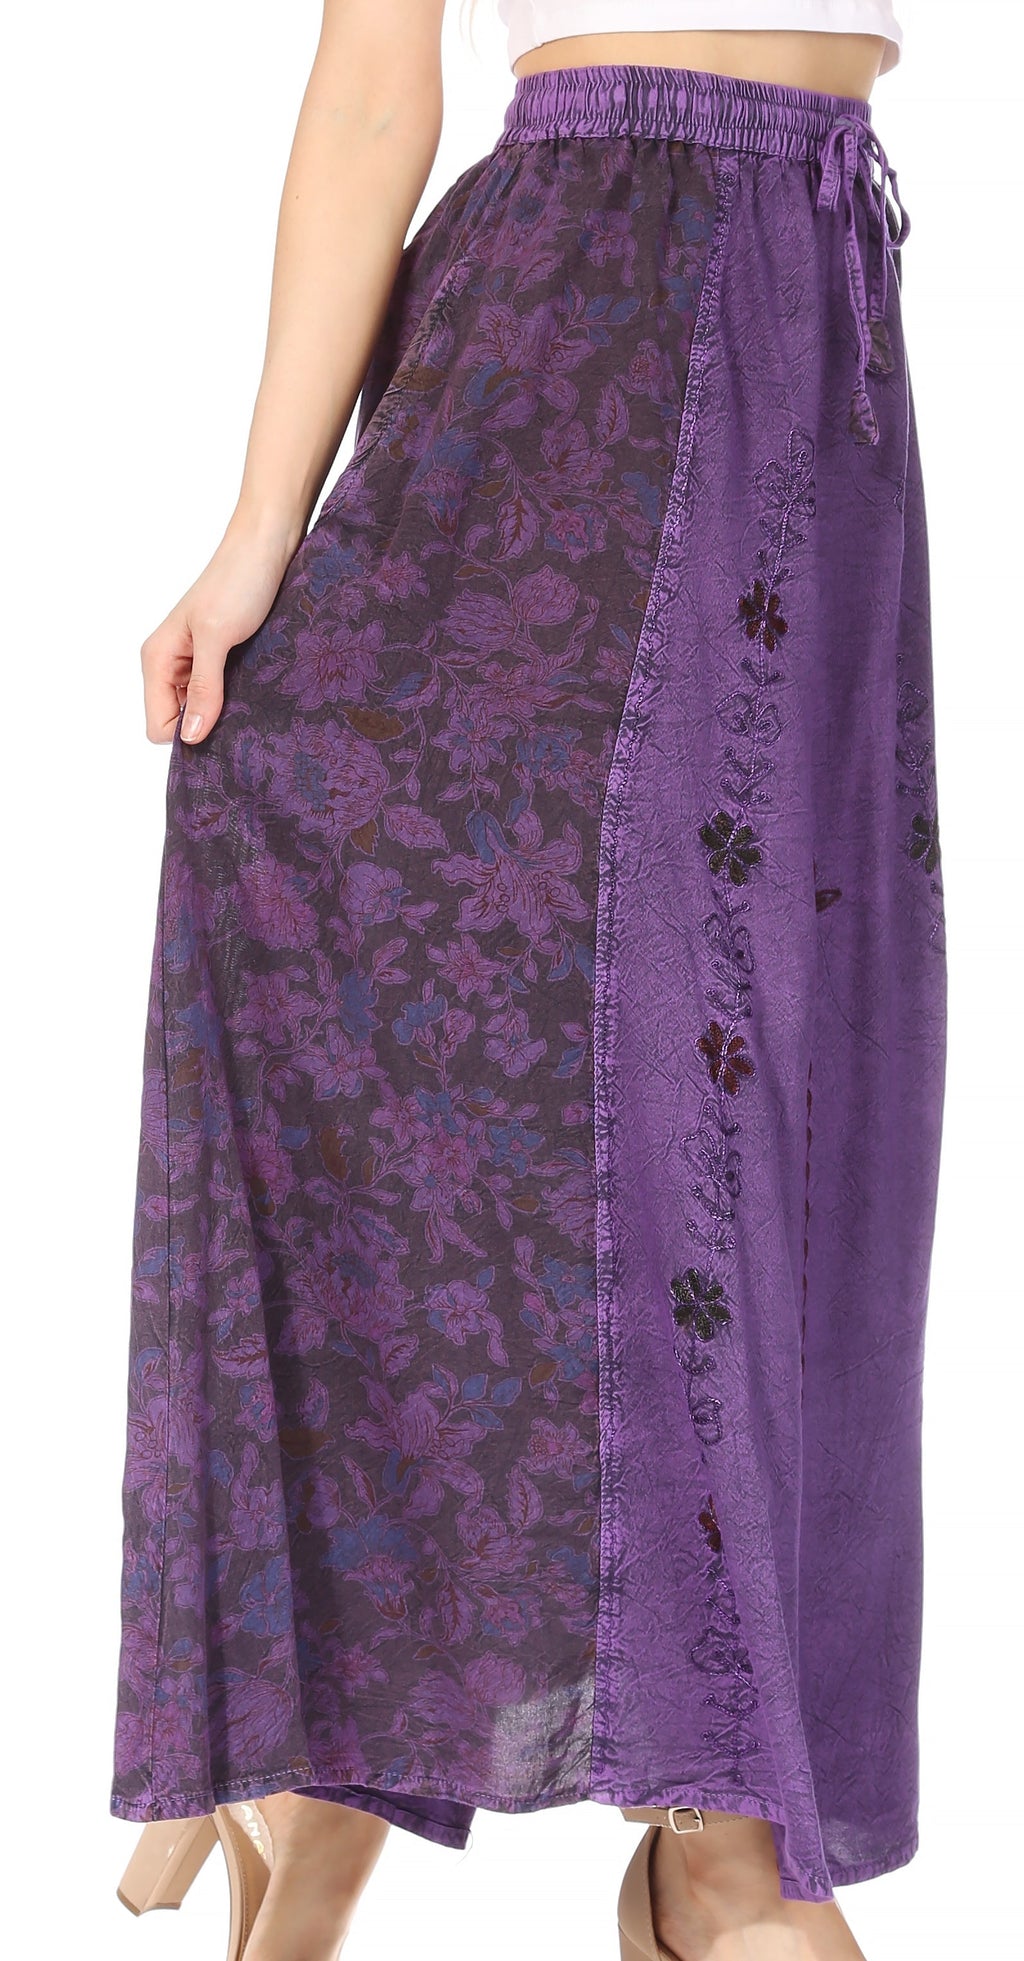 Sakkas Maran Women's Boho Embroidery Skirt with Lace Elastic Waist and